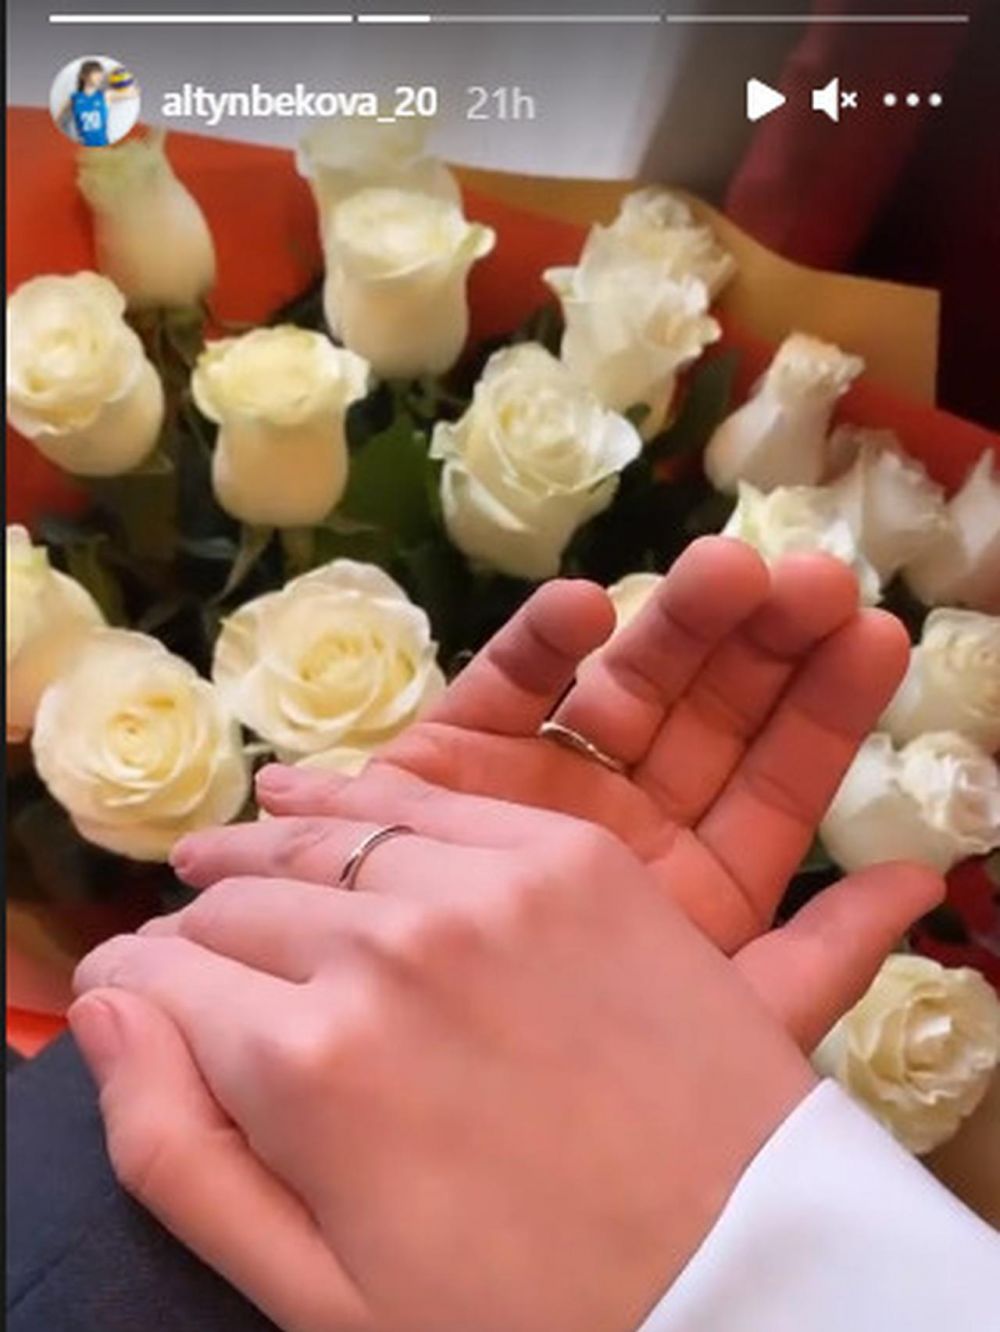 7 Momen pernikahan Sabina Altynbekova, pevoli cantik yang dulu viral